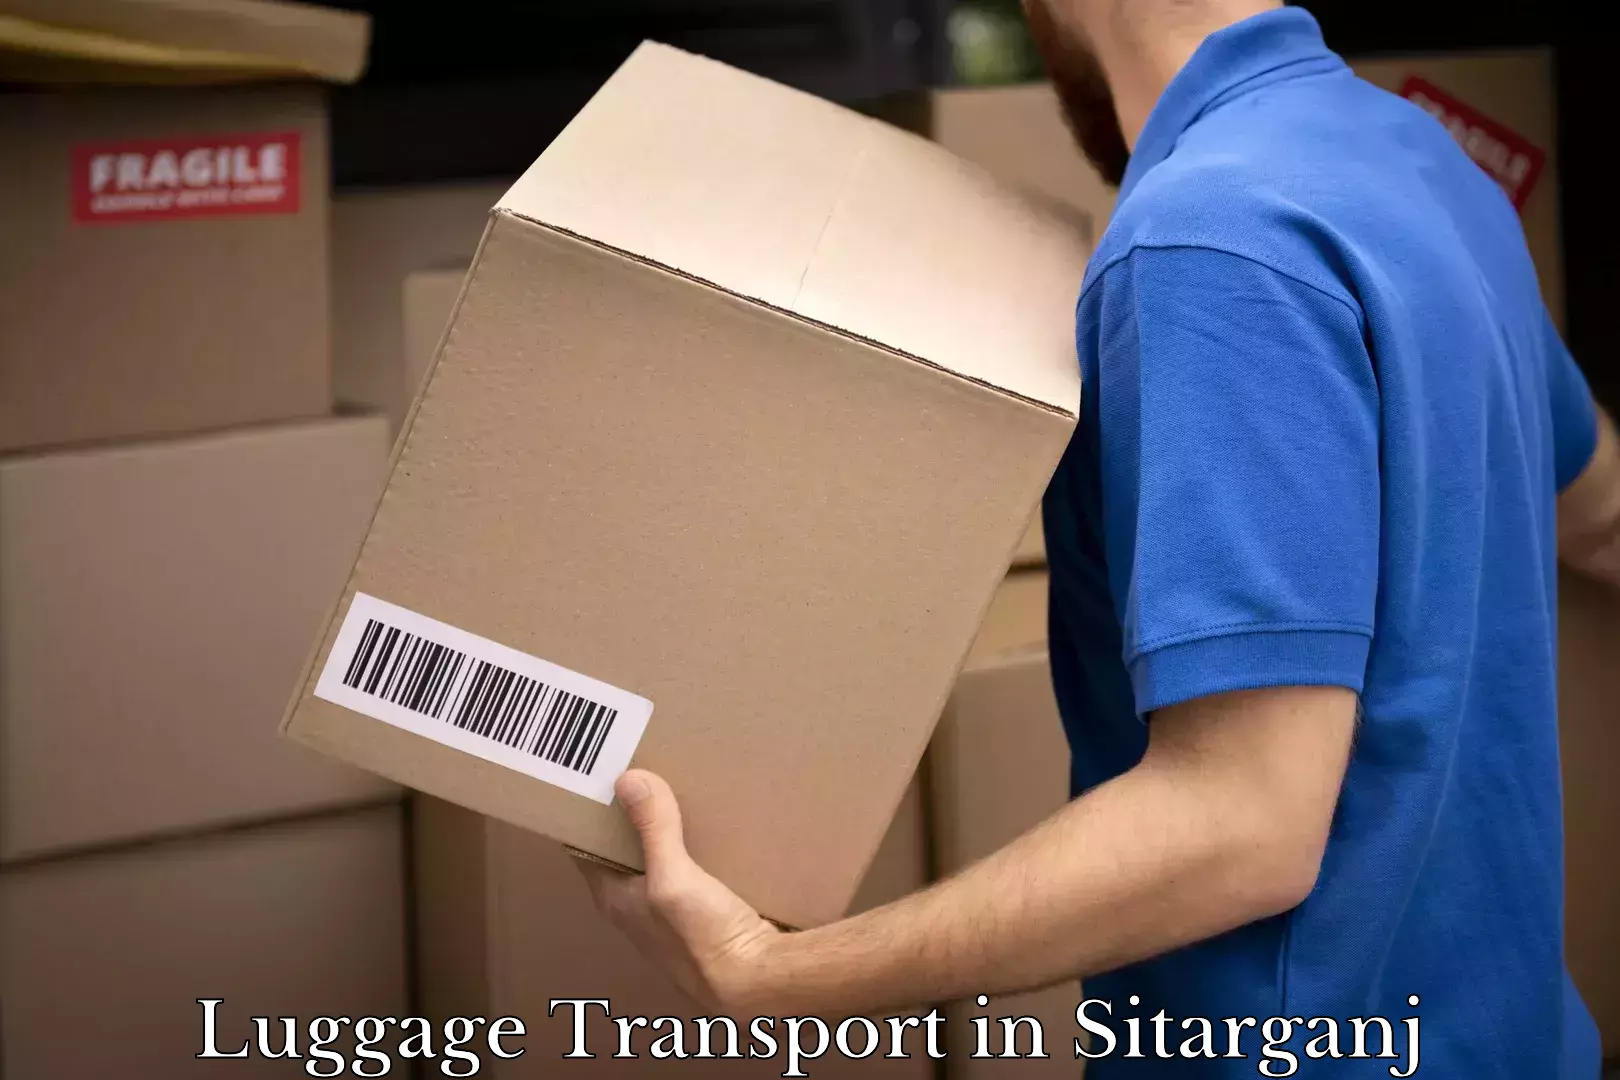 Luggage shipment processing in Sitarganj